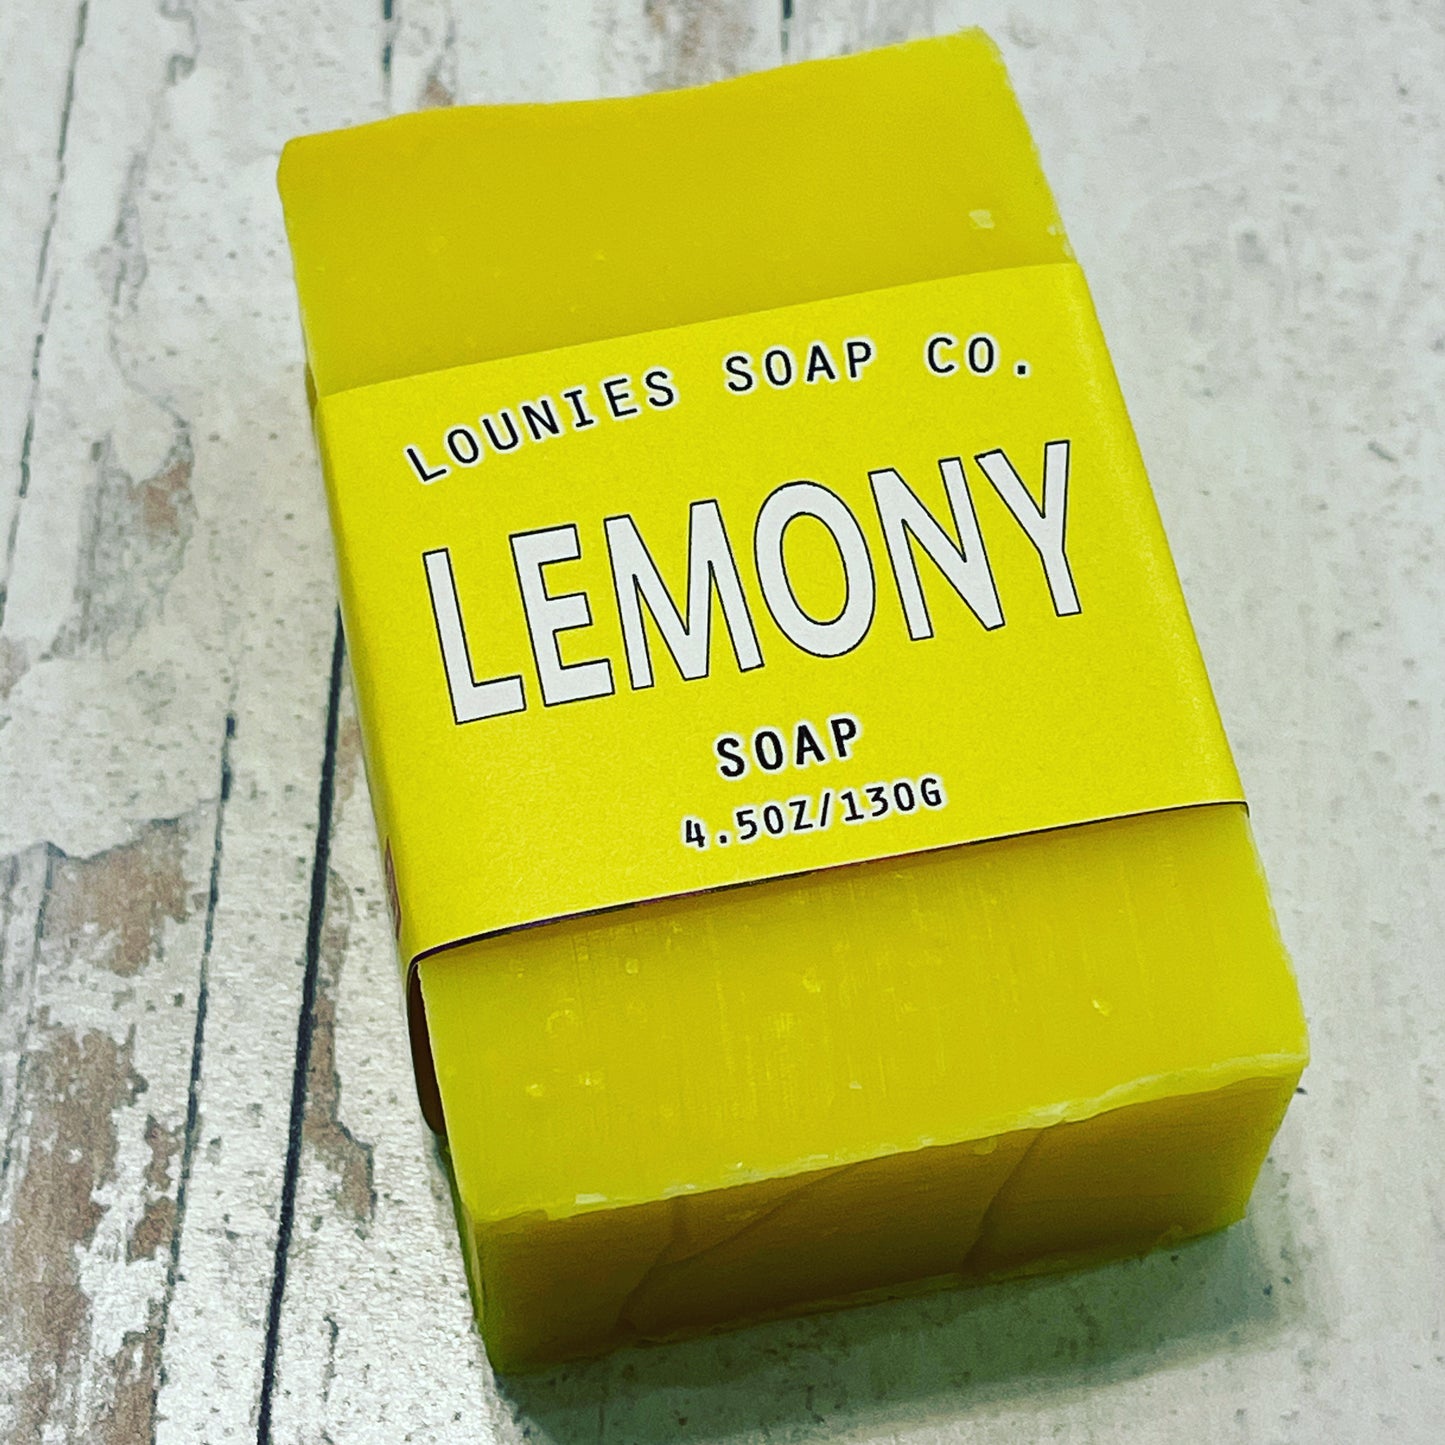 Lemony Soap